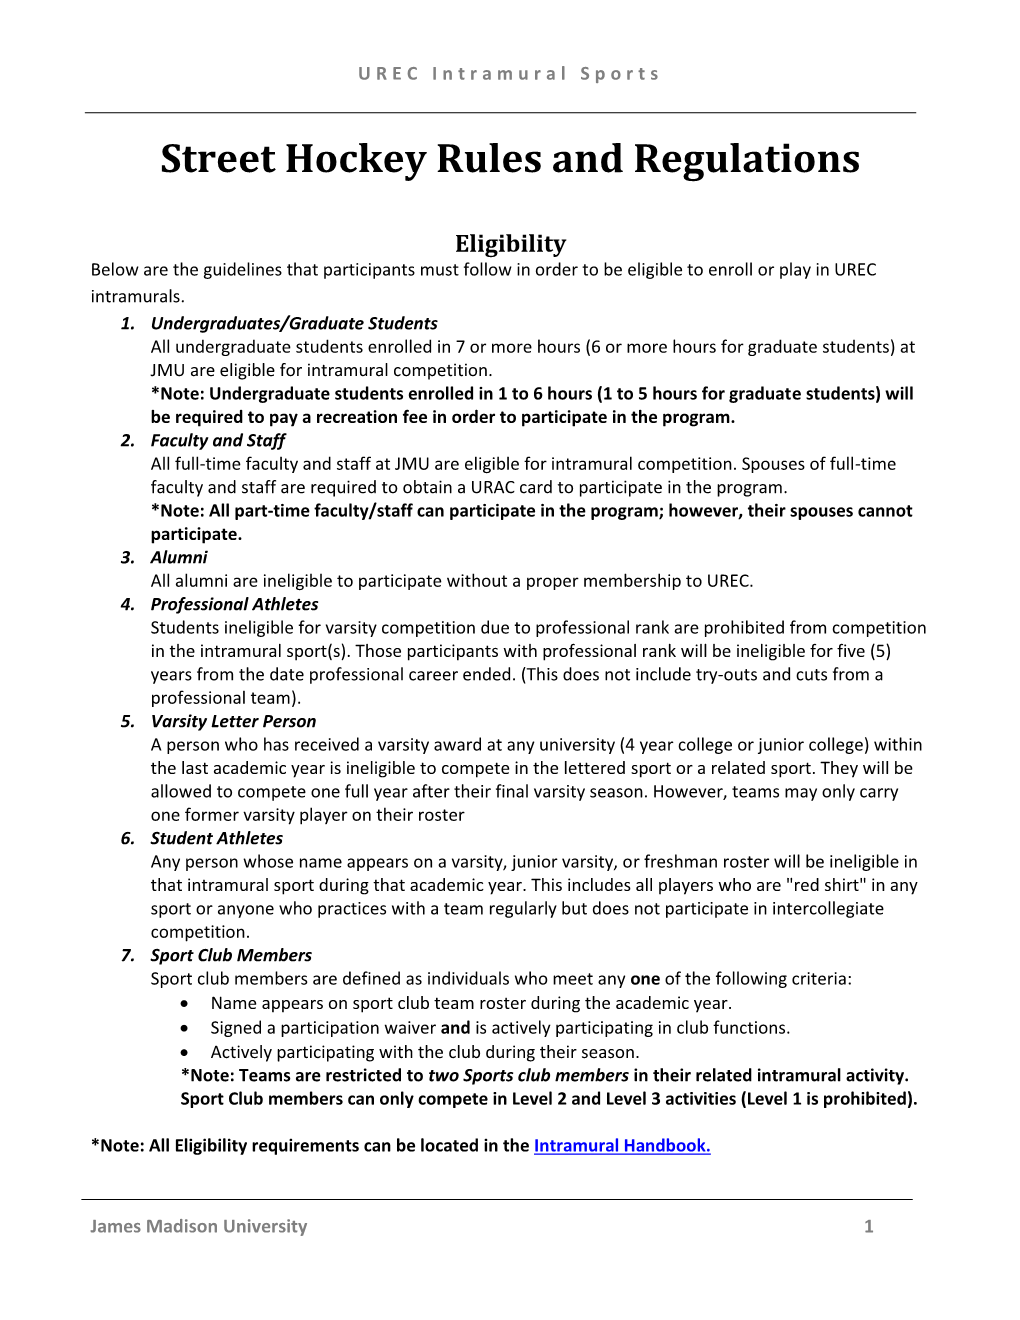 Street Hockey Rules and Regulations